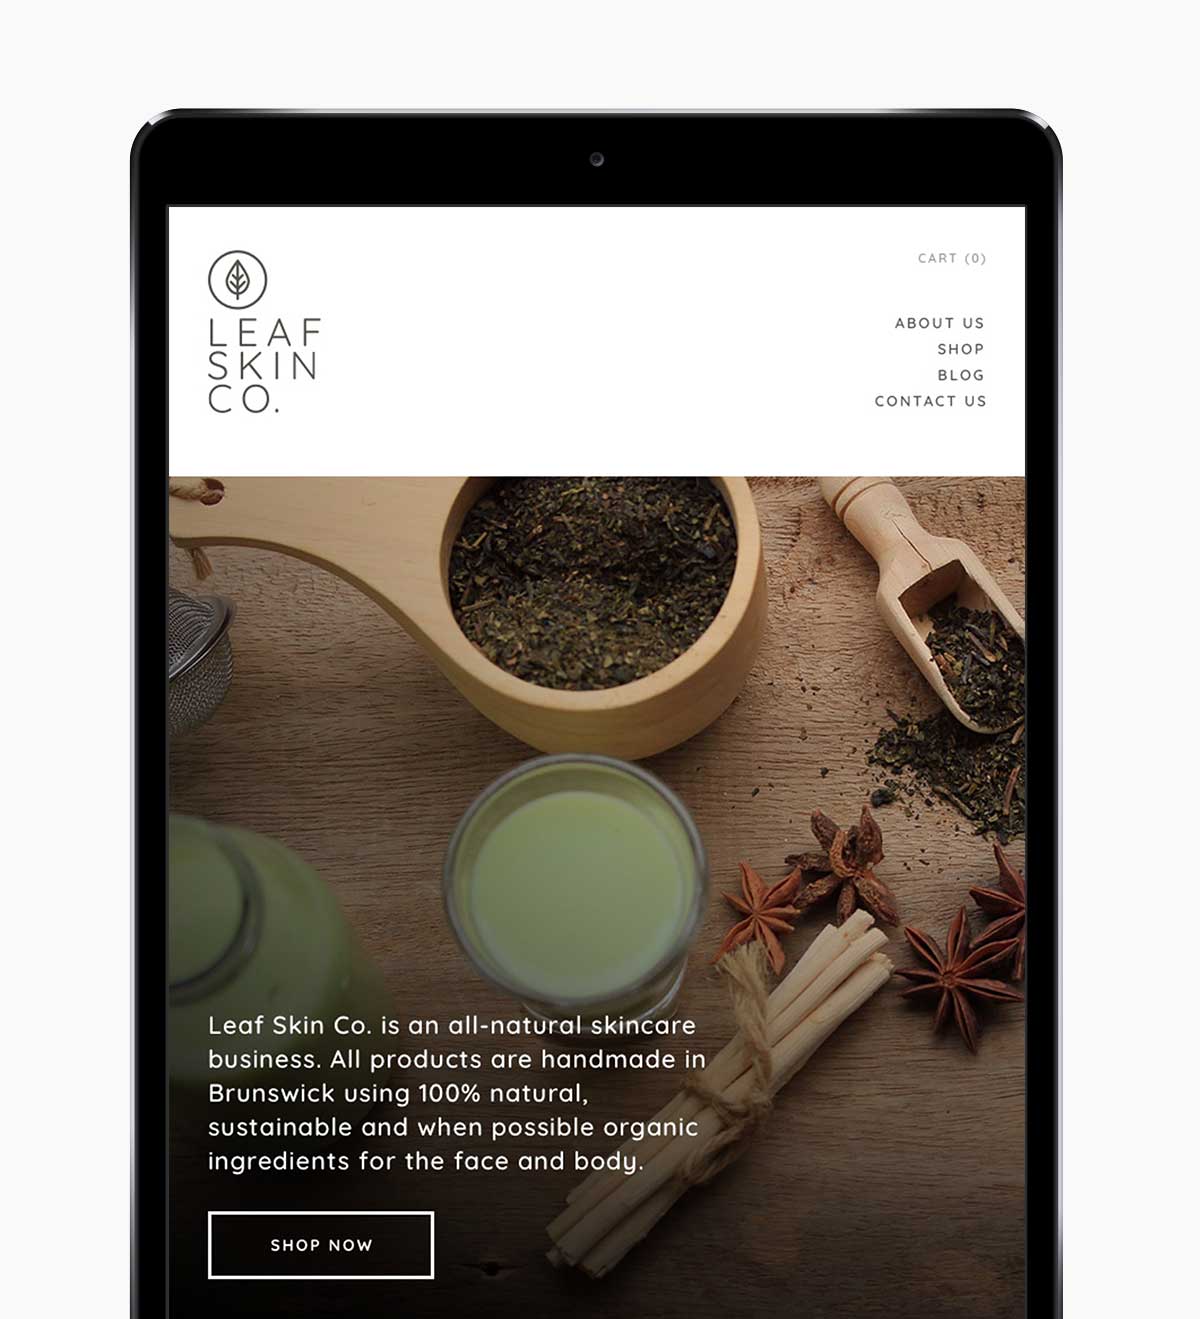 Leaf Skin Co. responsive website on iPad in portrait view